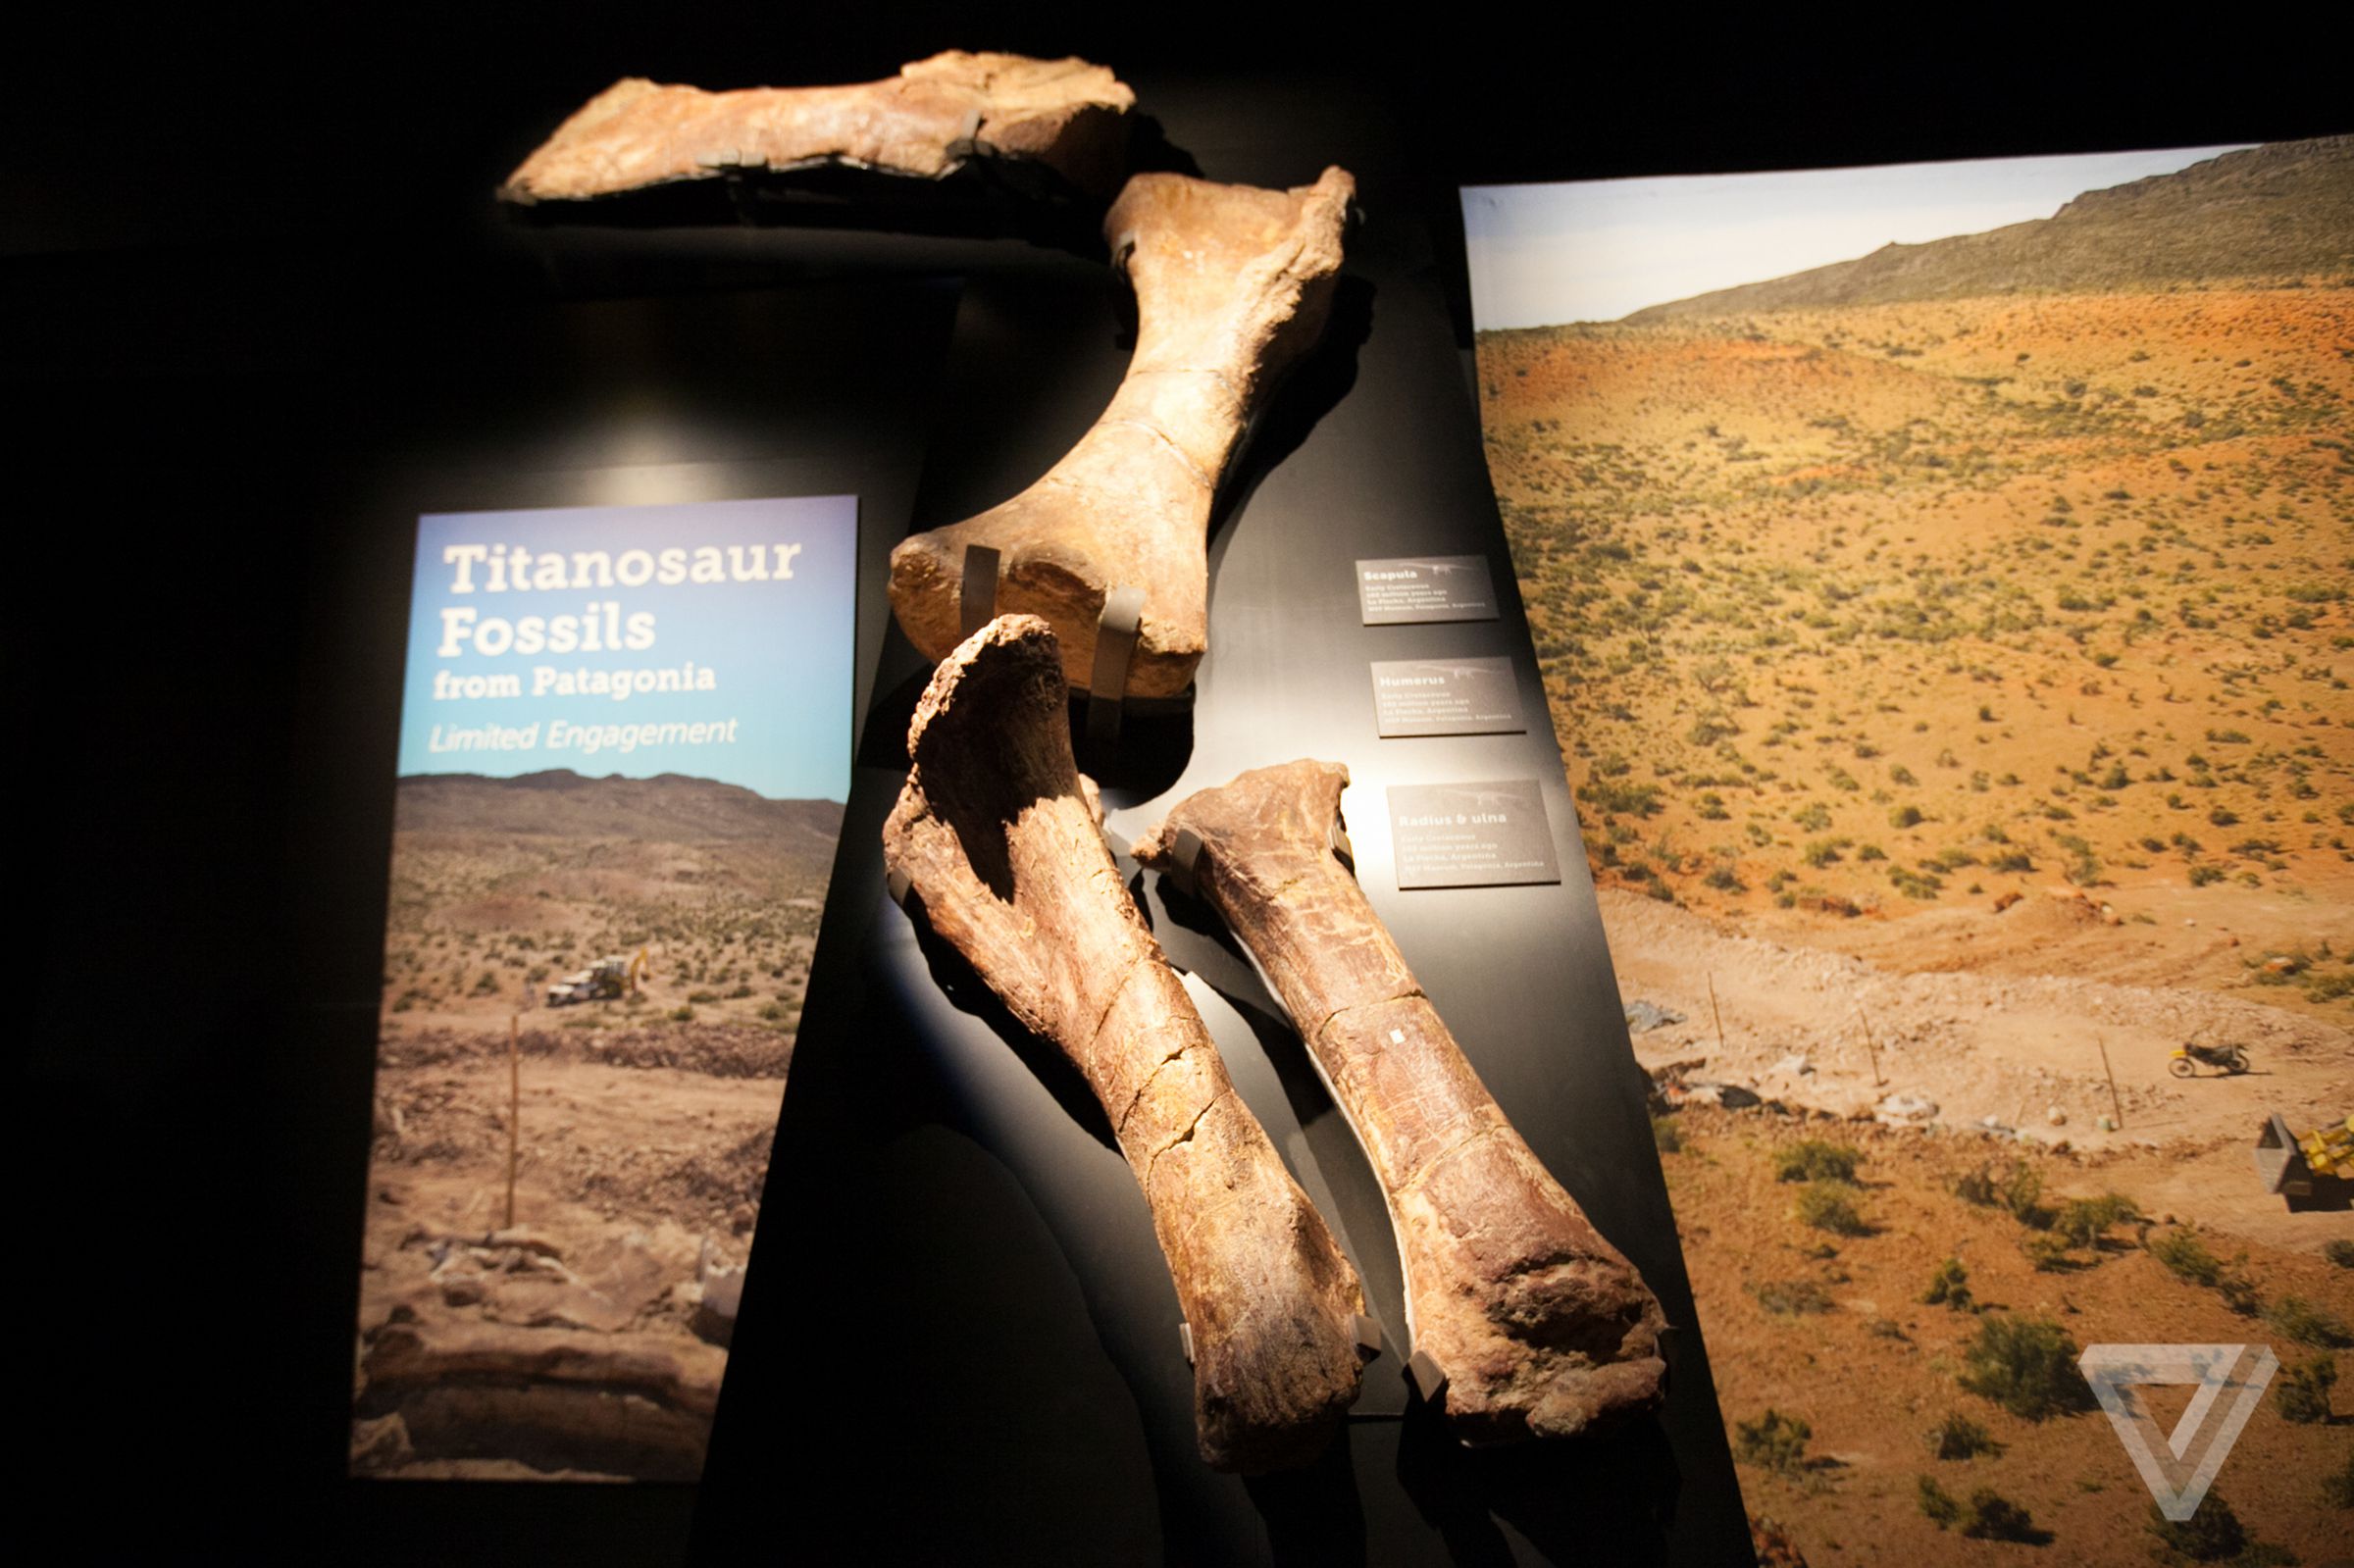 Titanosaur at The American Museum of Natural History